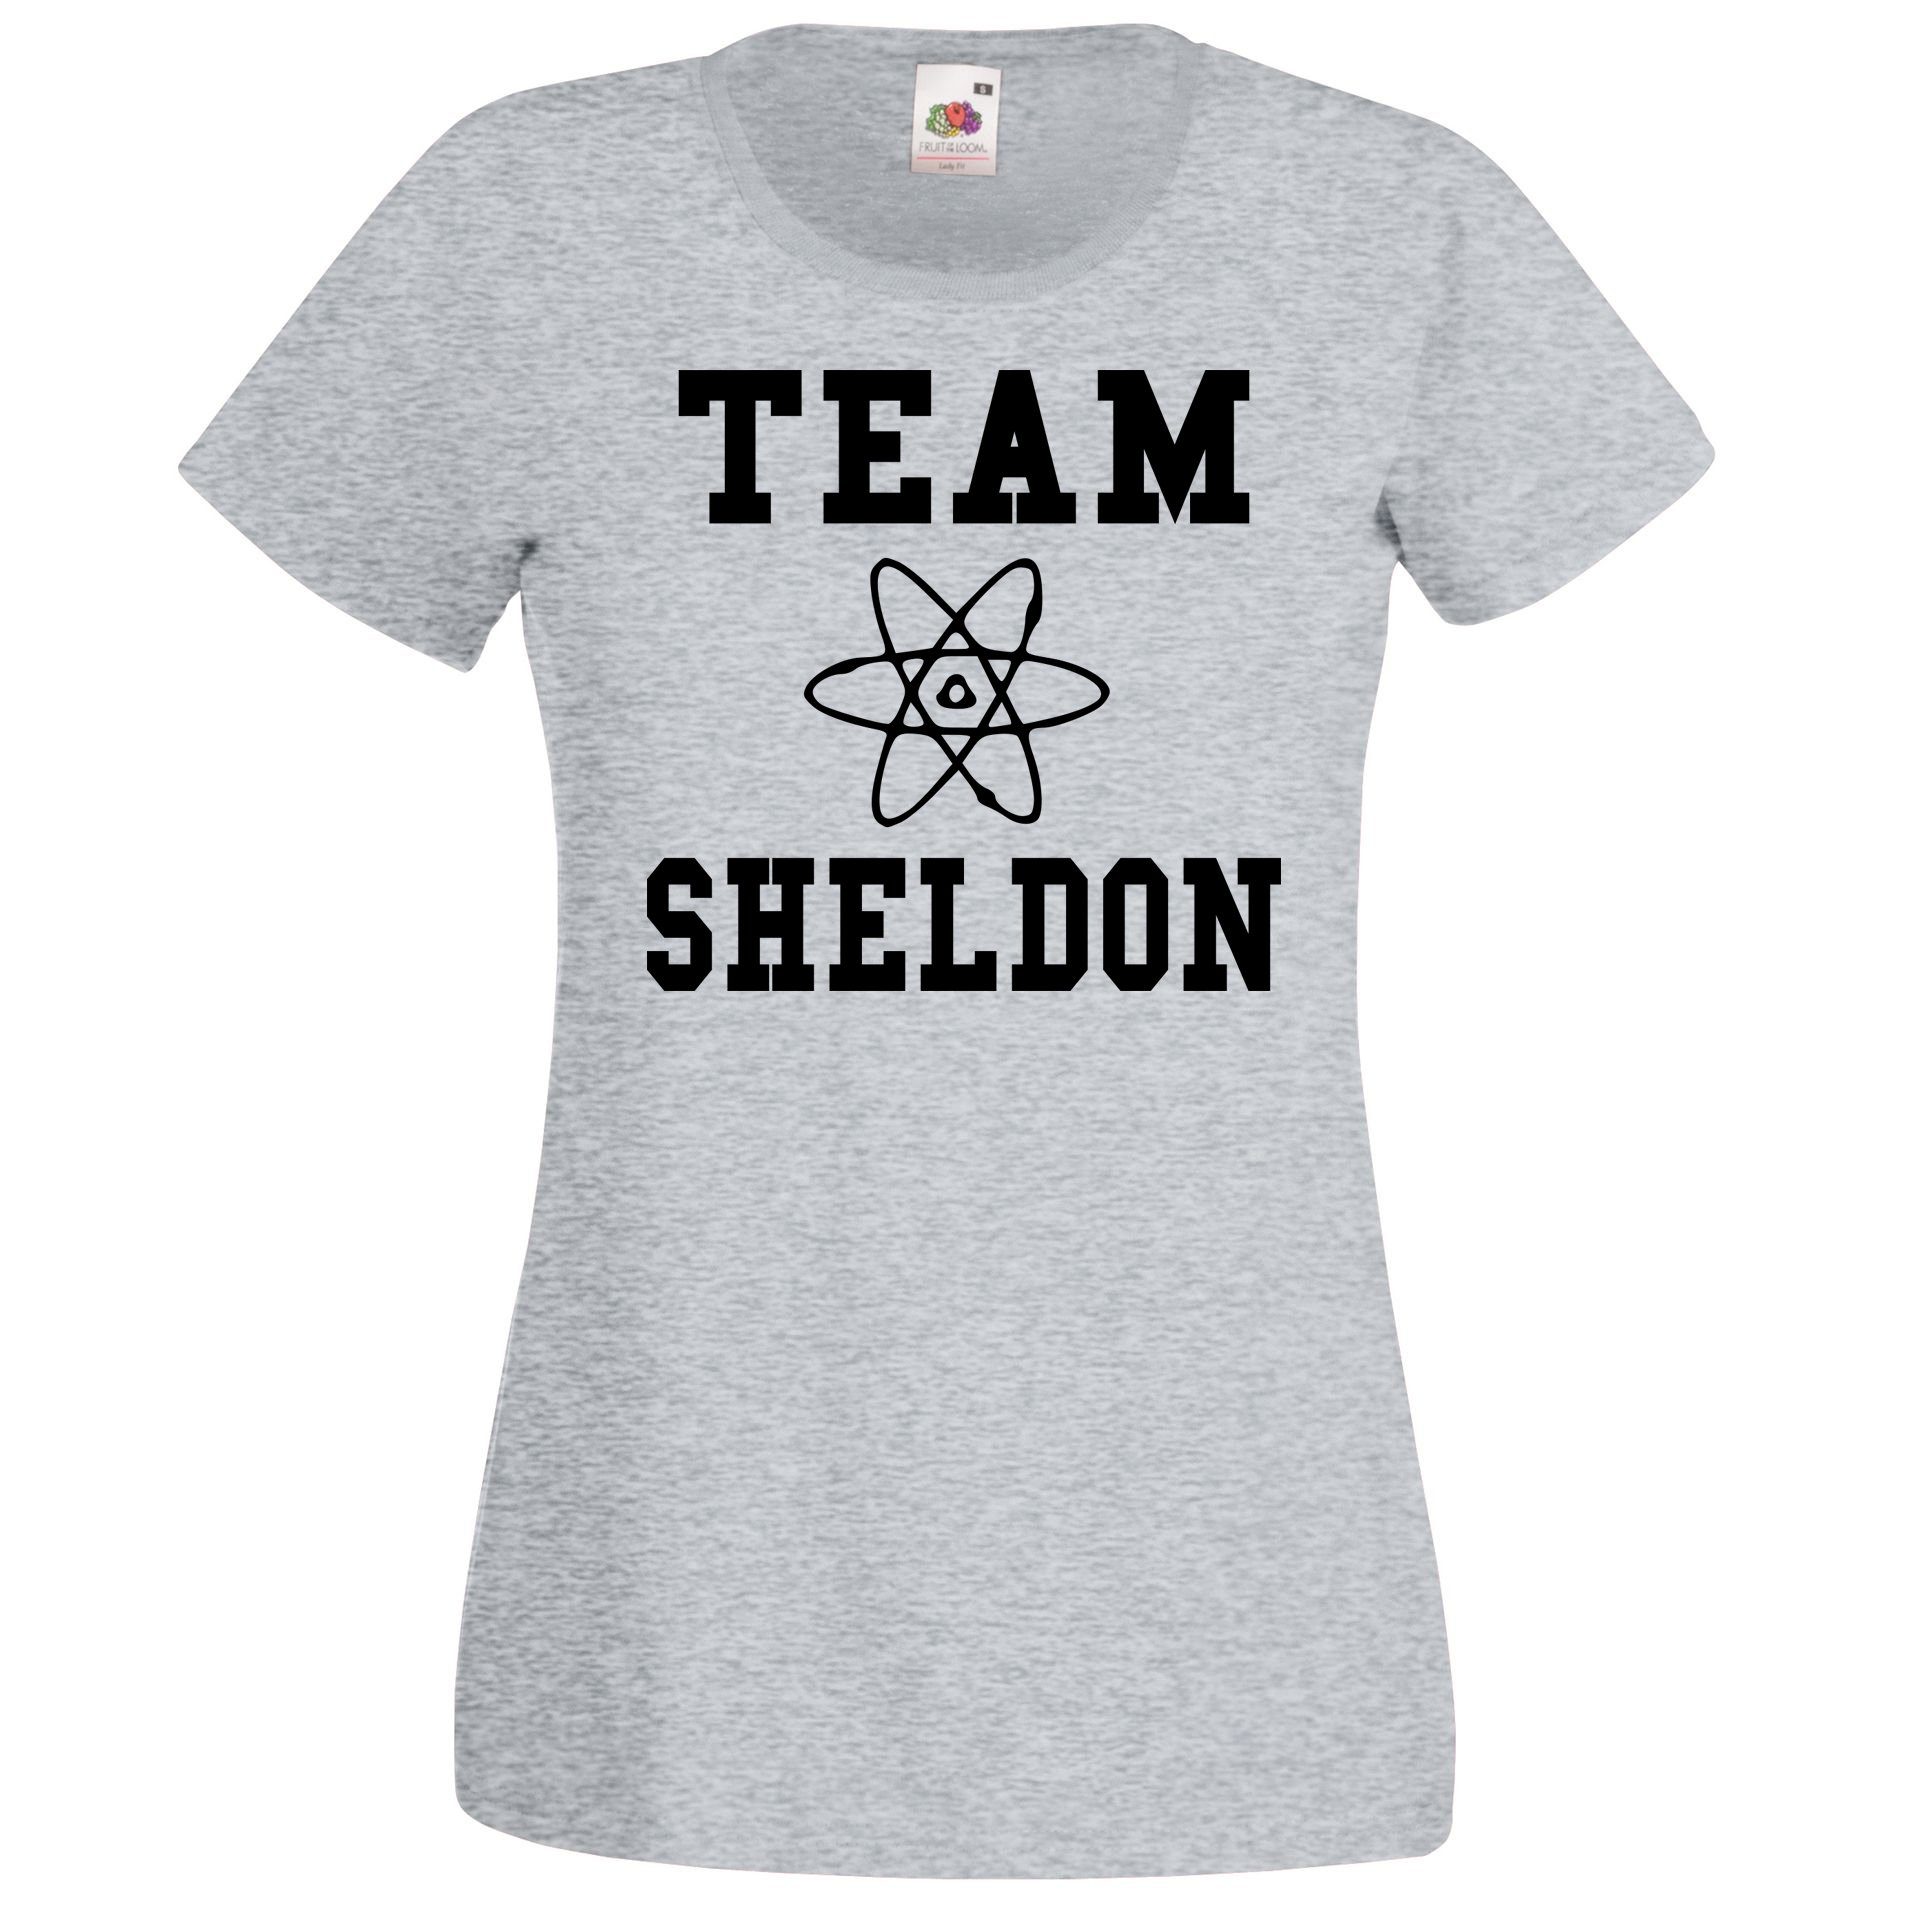 Grau Damen Team T-Shirt mit trendigem Youth T-Shirt Designz Sheldon Motiv